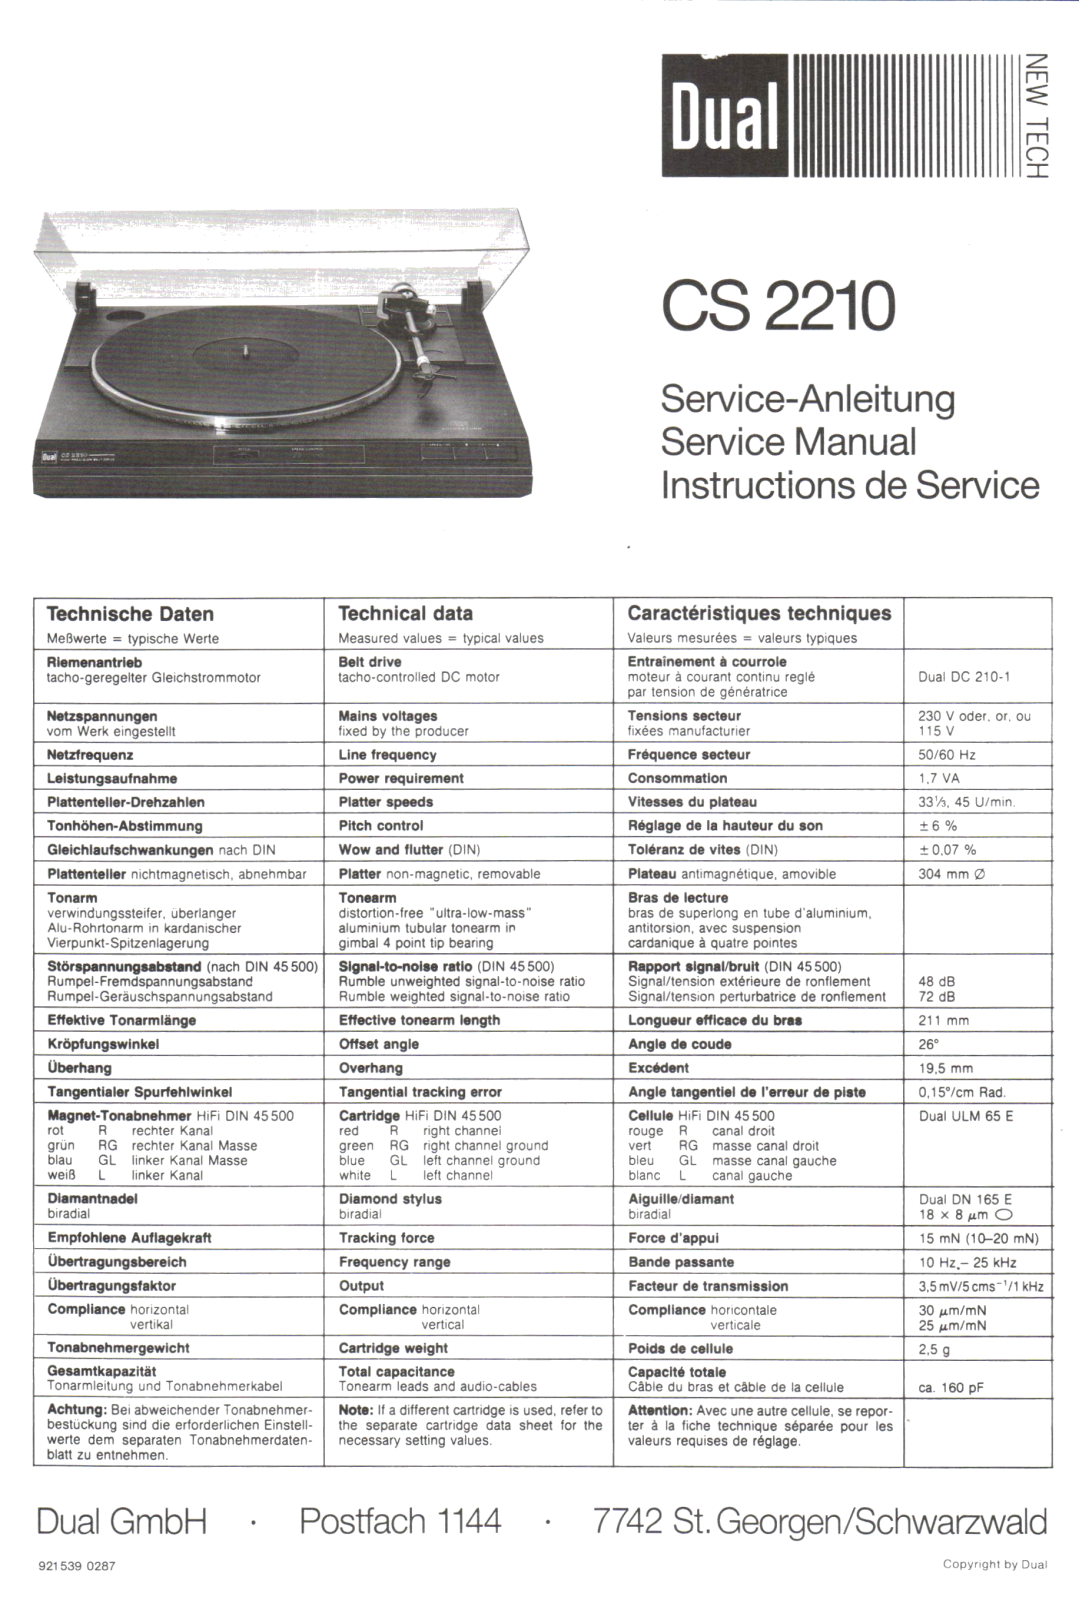 Dual CS-2210 Service Manual